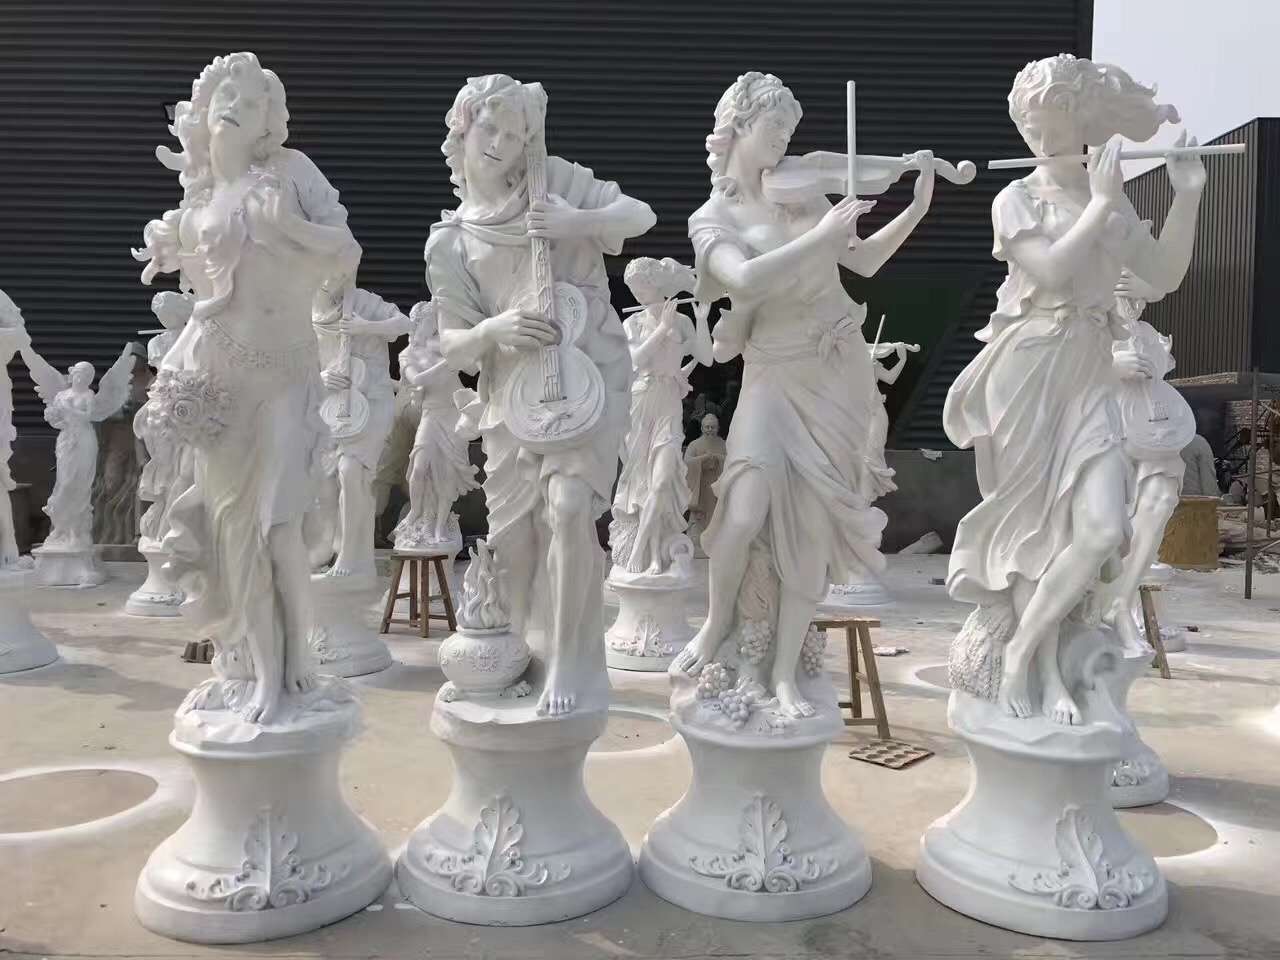 Home Decorative Life Size Fiberglass Band Female Statues Resin Music Theme Girl Sculptures (2)